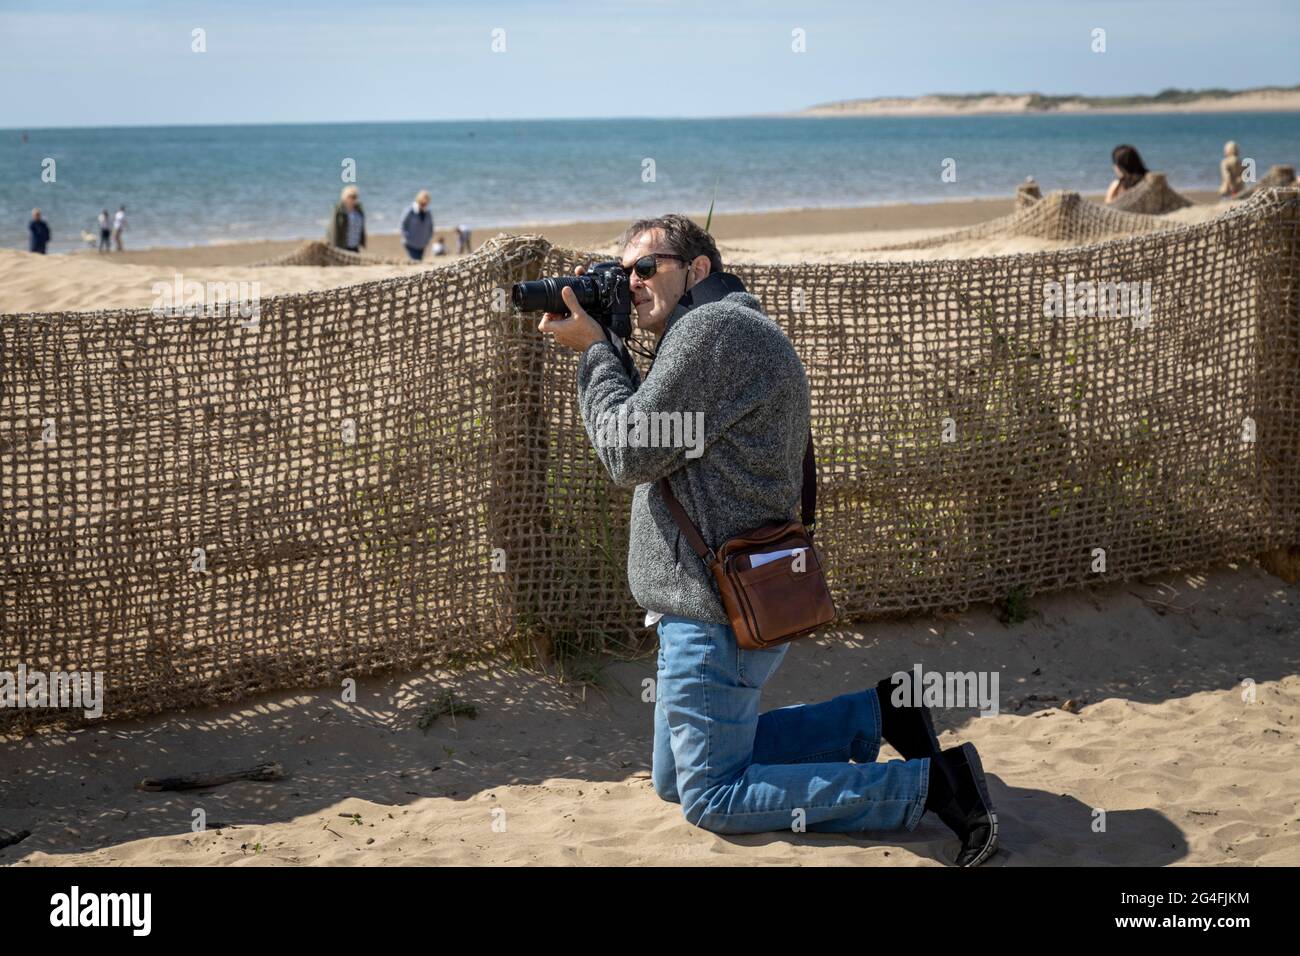 A keen photographer taking photographs on a beach Stock Photo